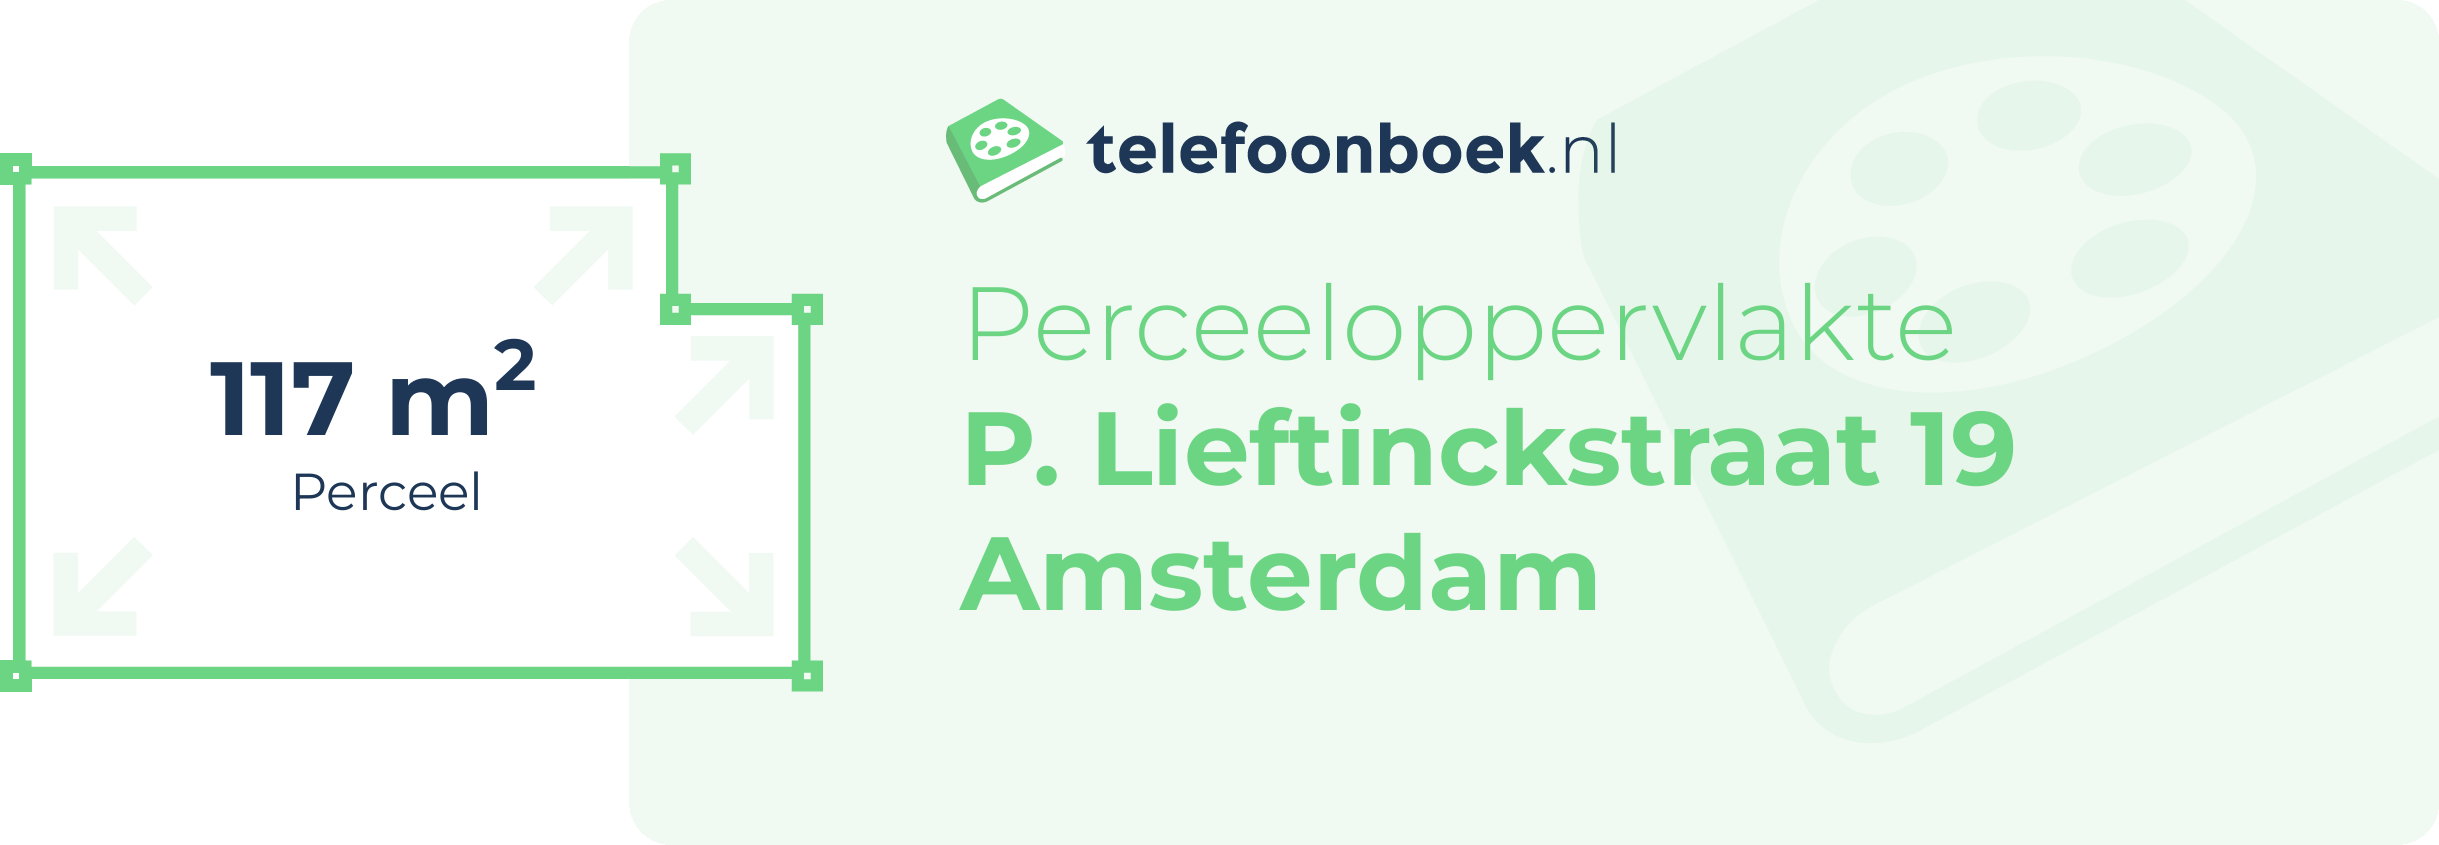 Perceeloppervlakte P. Lieftinckstraat 19 Amsterdam